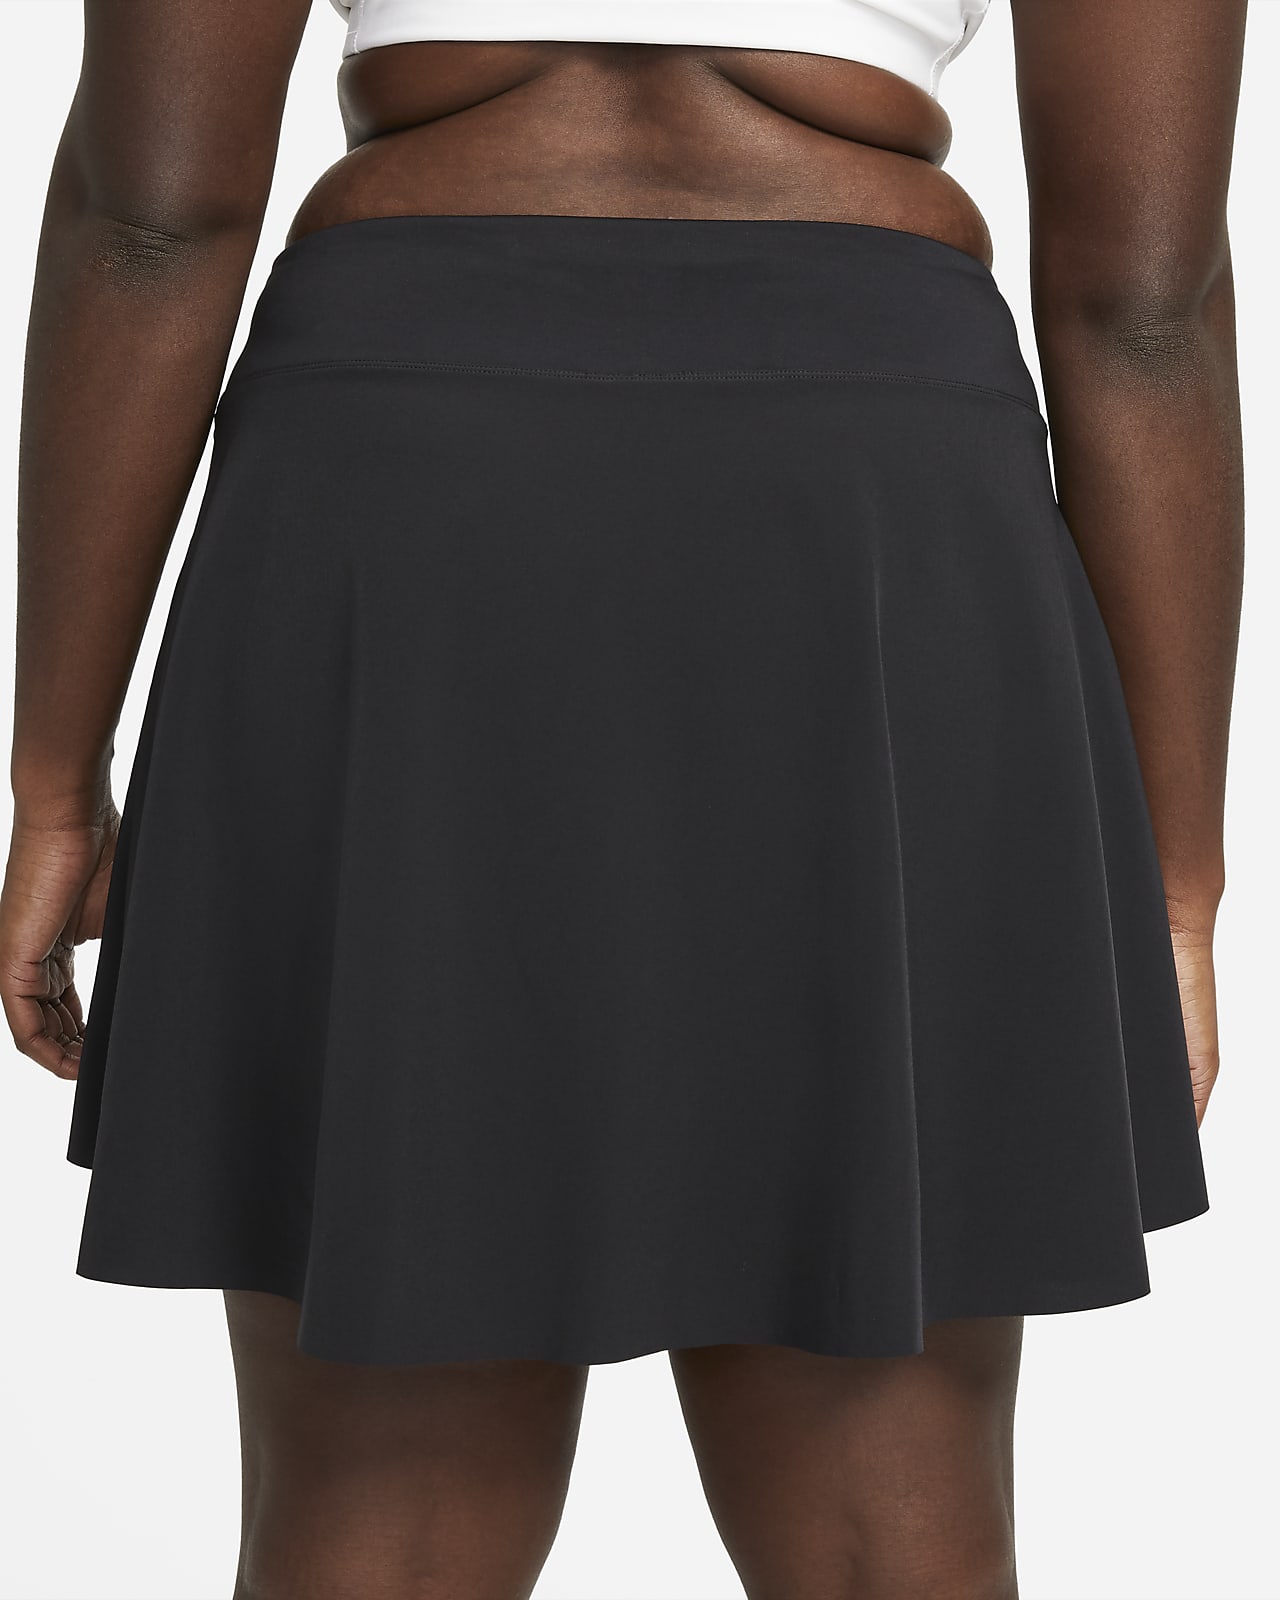 Club Skirt Regular Skirt (Plus Size).